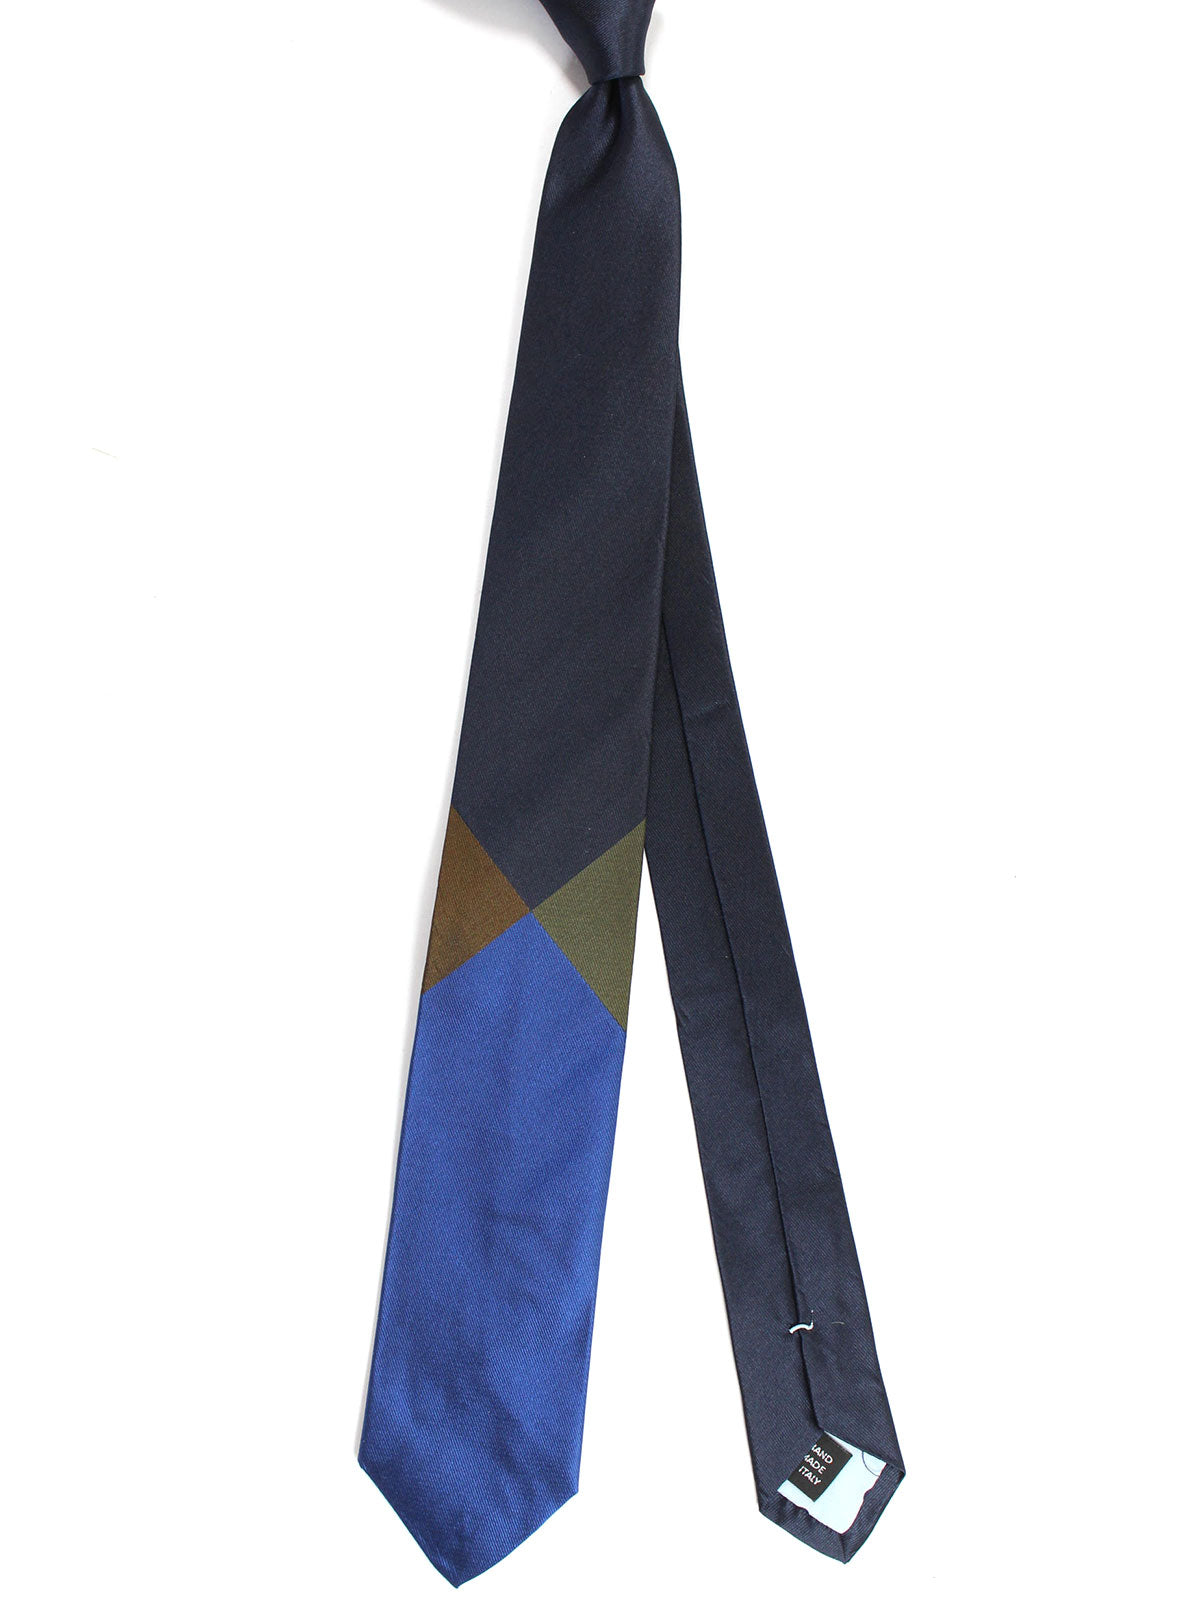 Gene Meyer Silk Tie Royal Blue Black Design